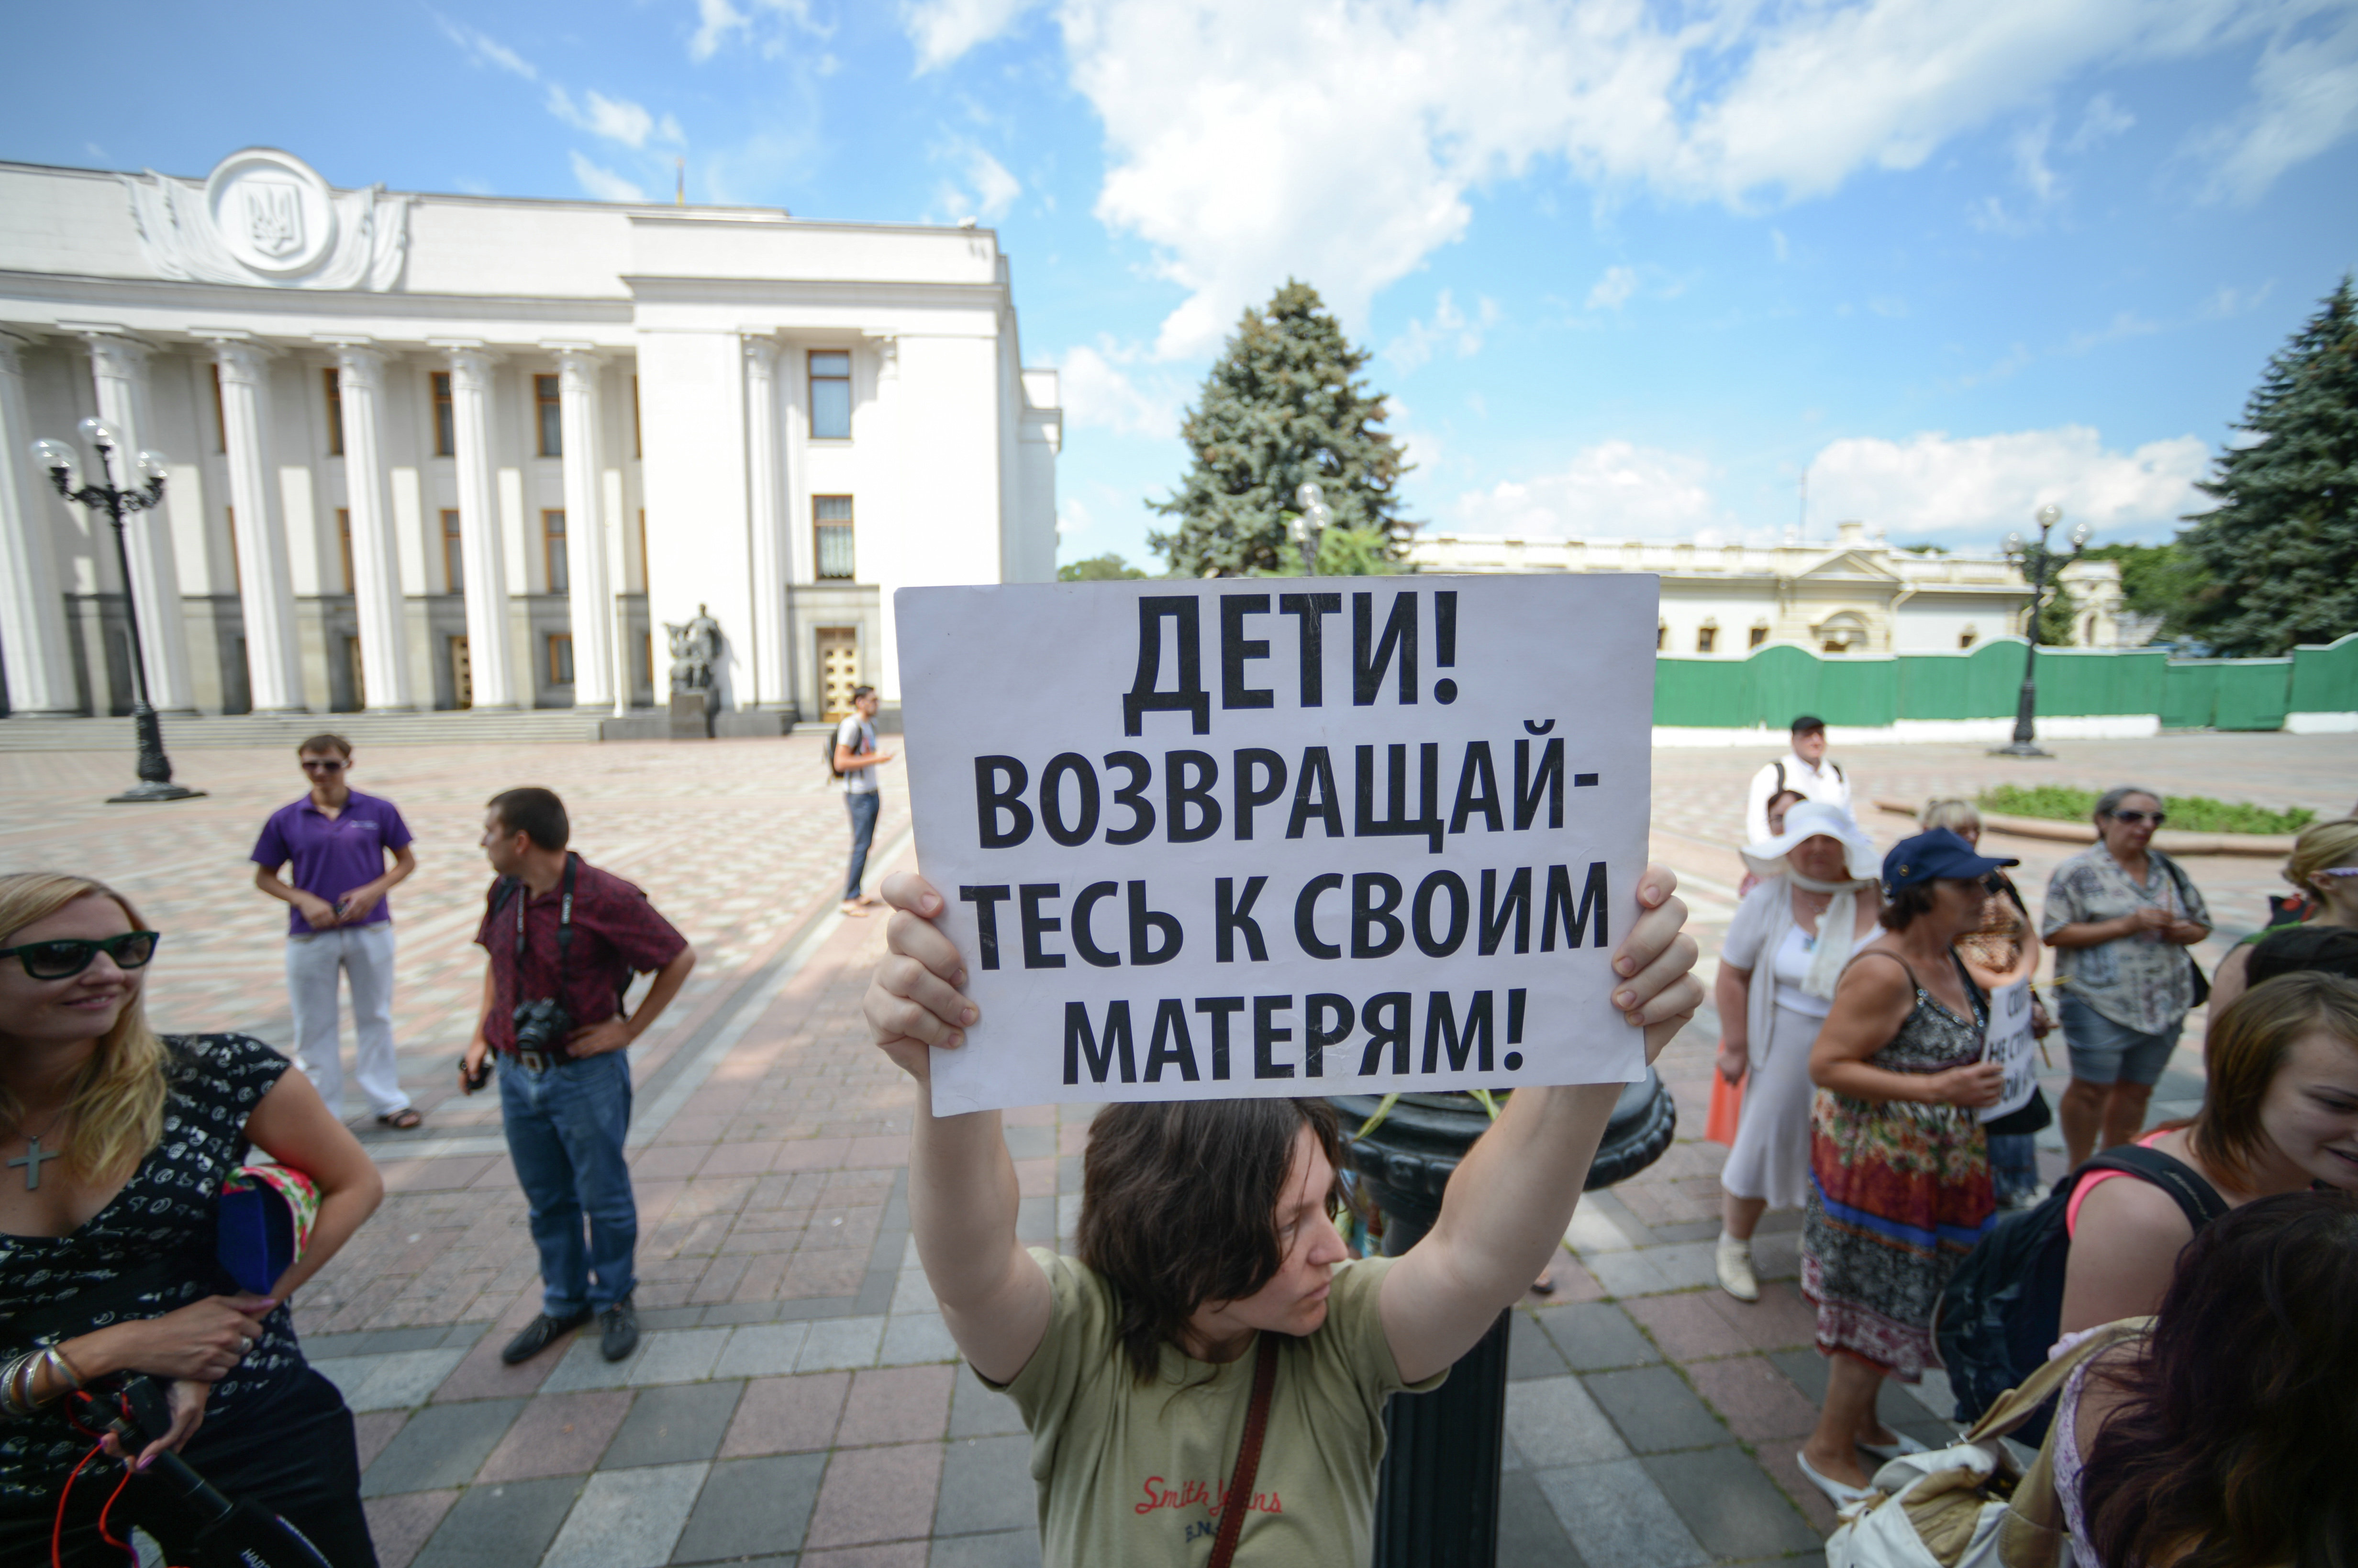 Митинг матери. Митинг матерей против войны. Украинские матери против войны. Украина врет. Украинские женщины протестуют против мобилизации.